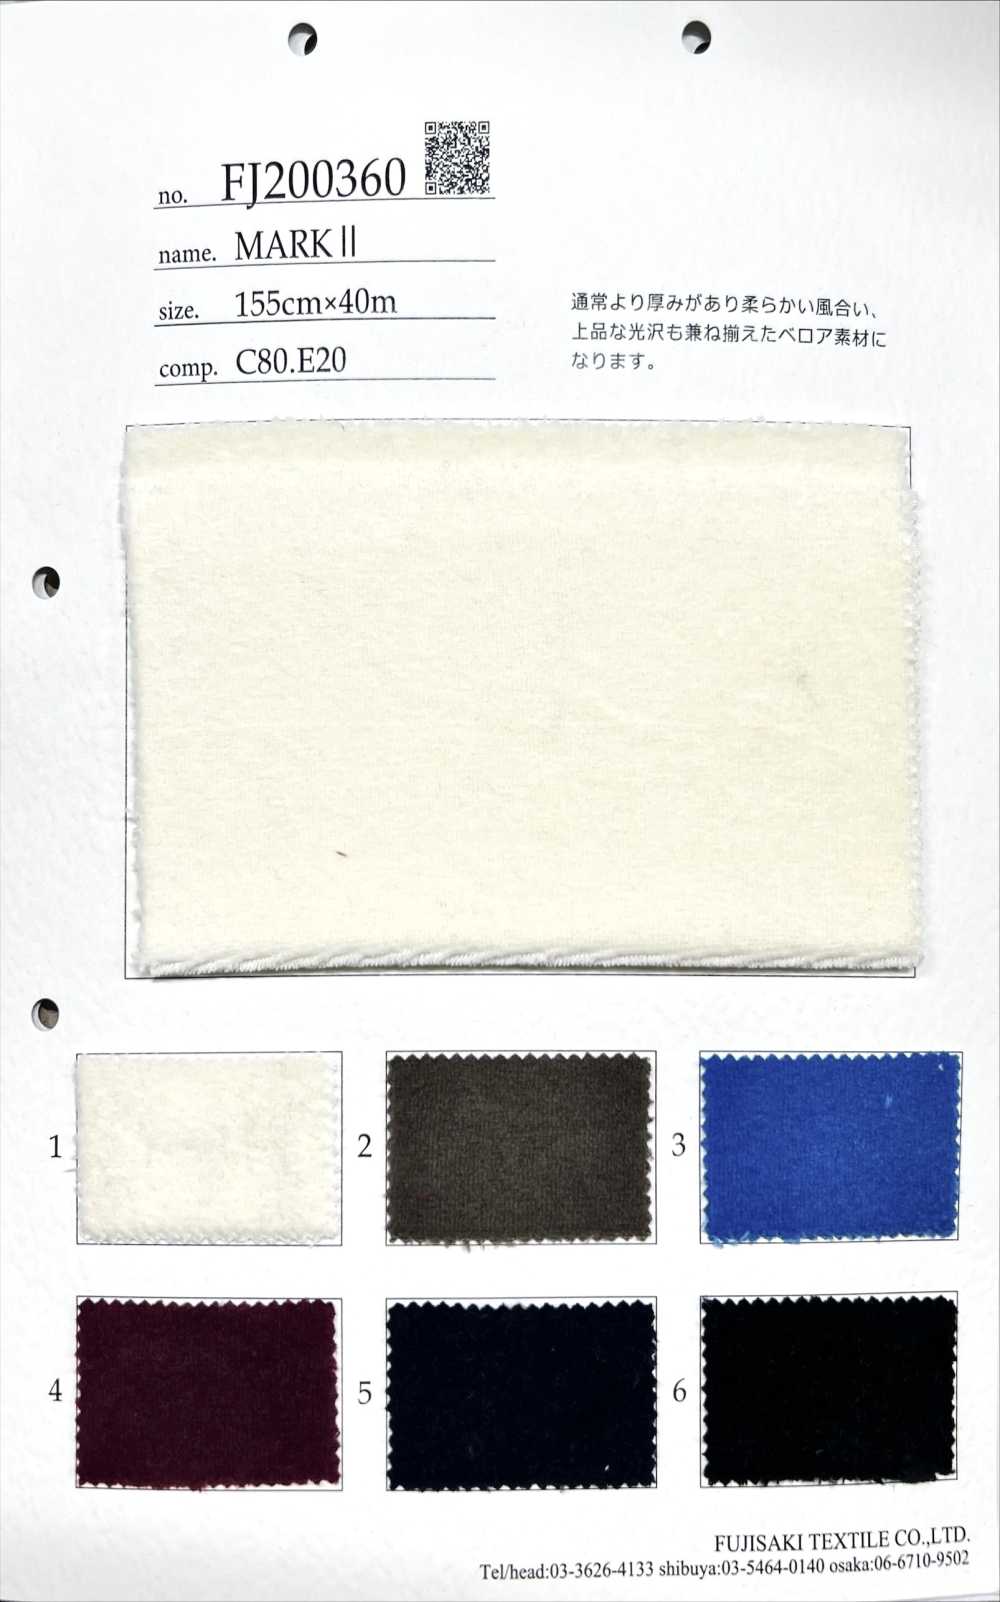 FJ200360 MARCOⅡ[Tessile / Tessuto] Fujisaki Textile